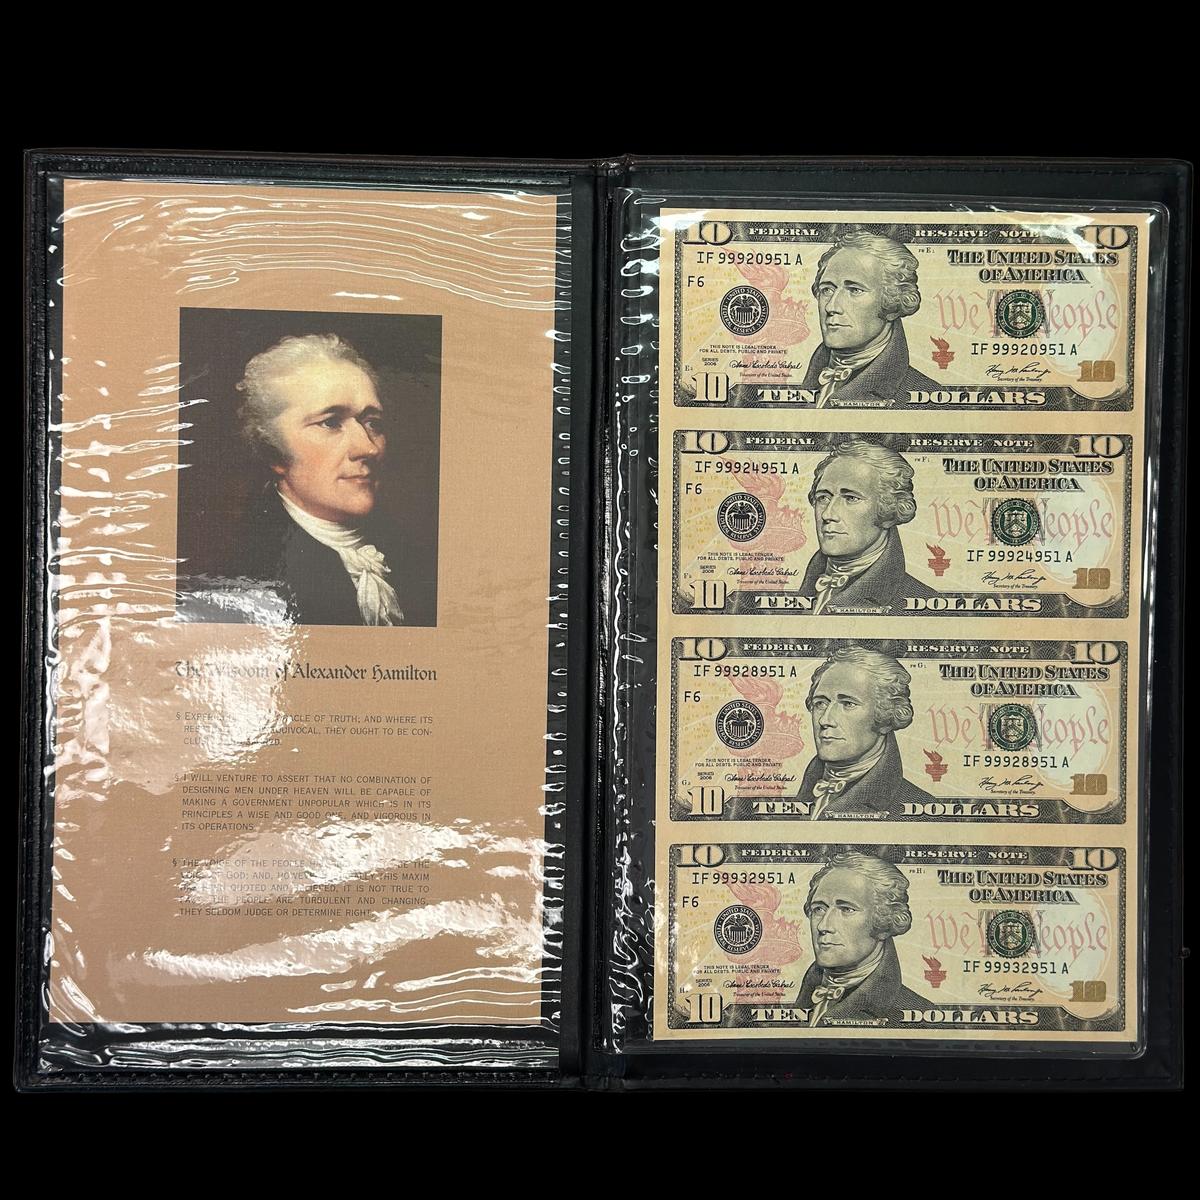 Uncut sheet of 4 2006 U.S. green seal $10 Federal Reserve banknotes